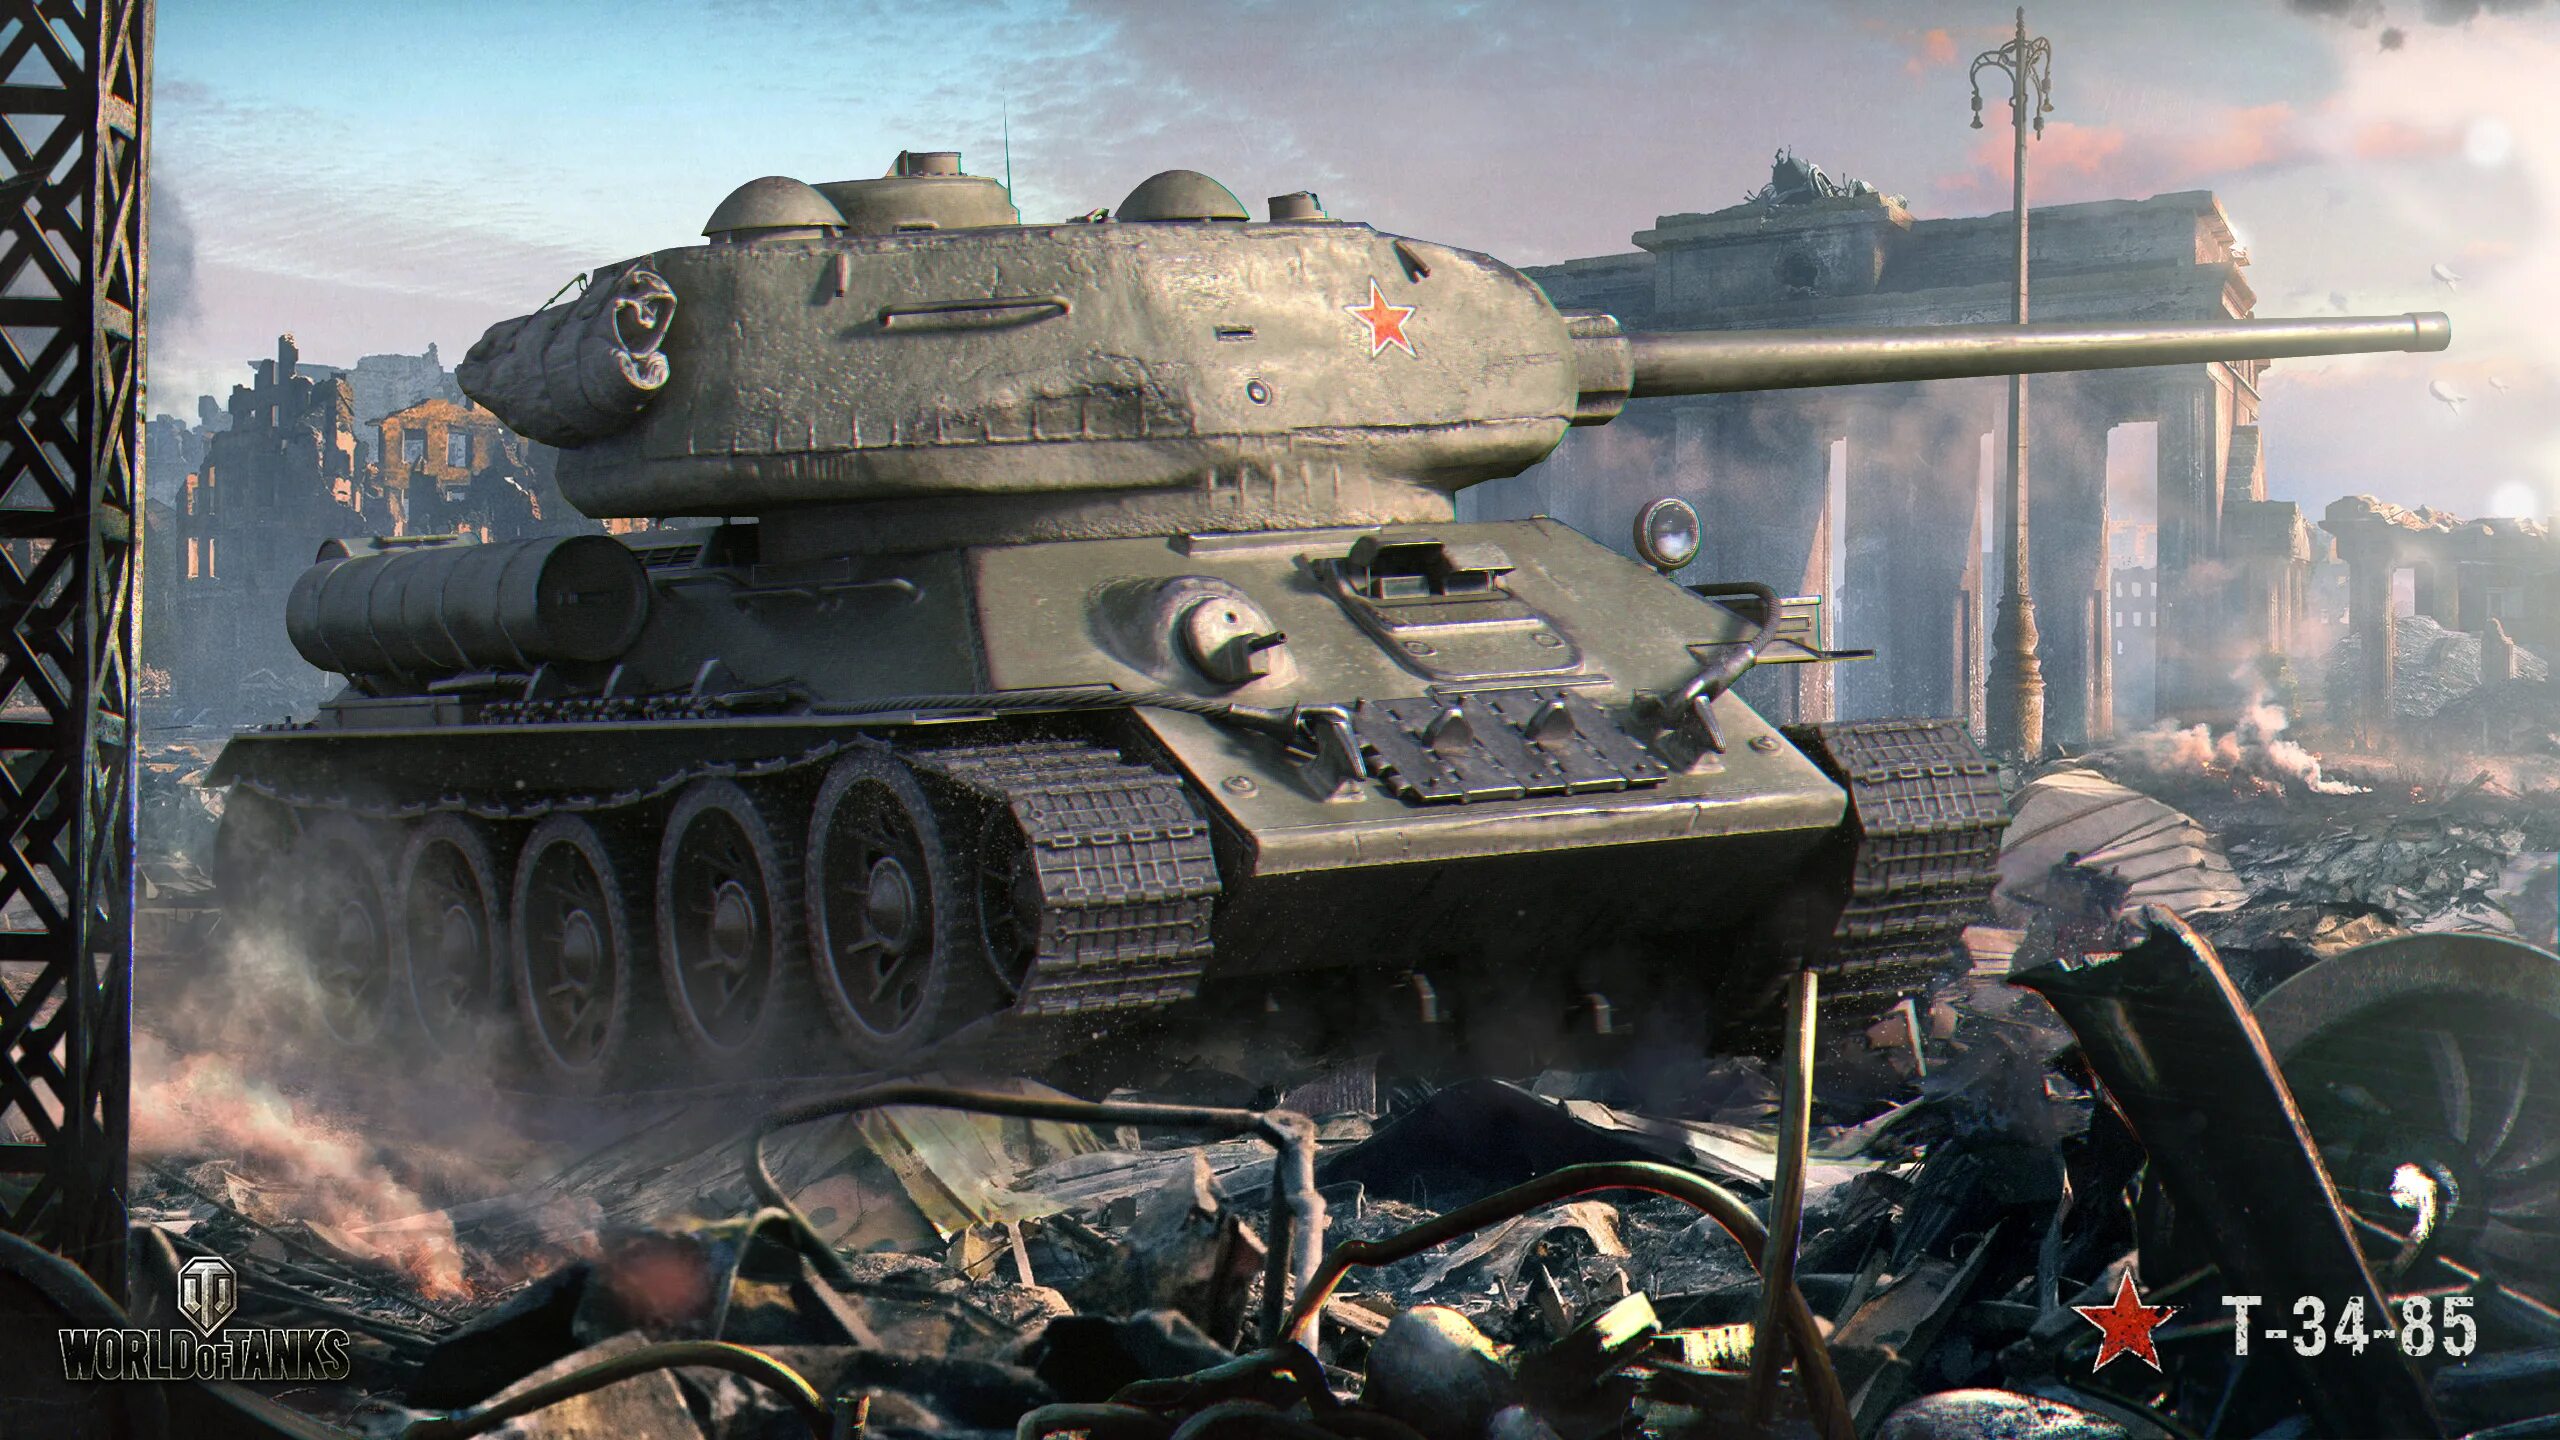 Ворлд т. Т-34 World of Tanks. Т 34 85 ворлд оф танк. Танк т34-85 в World of Tanks. Т-34-85 танк WOT.